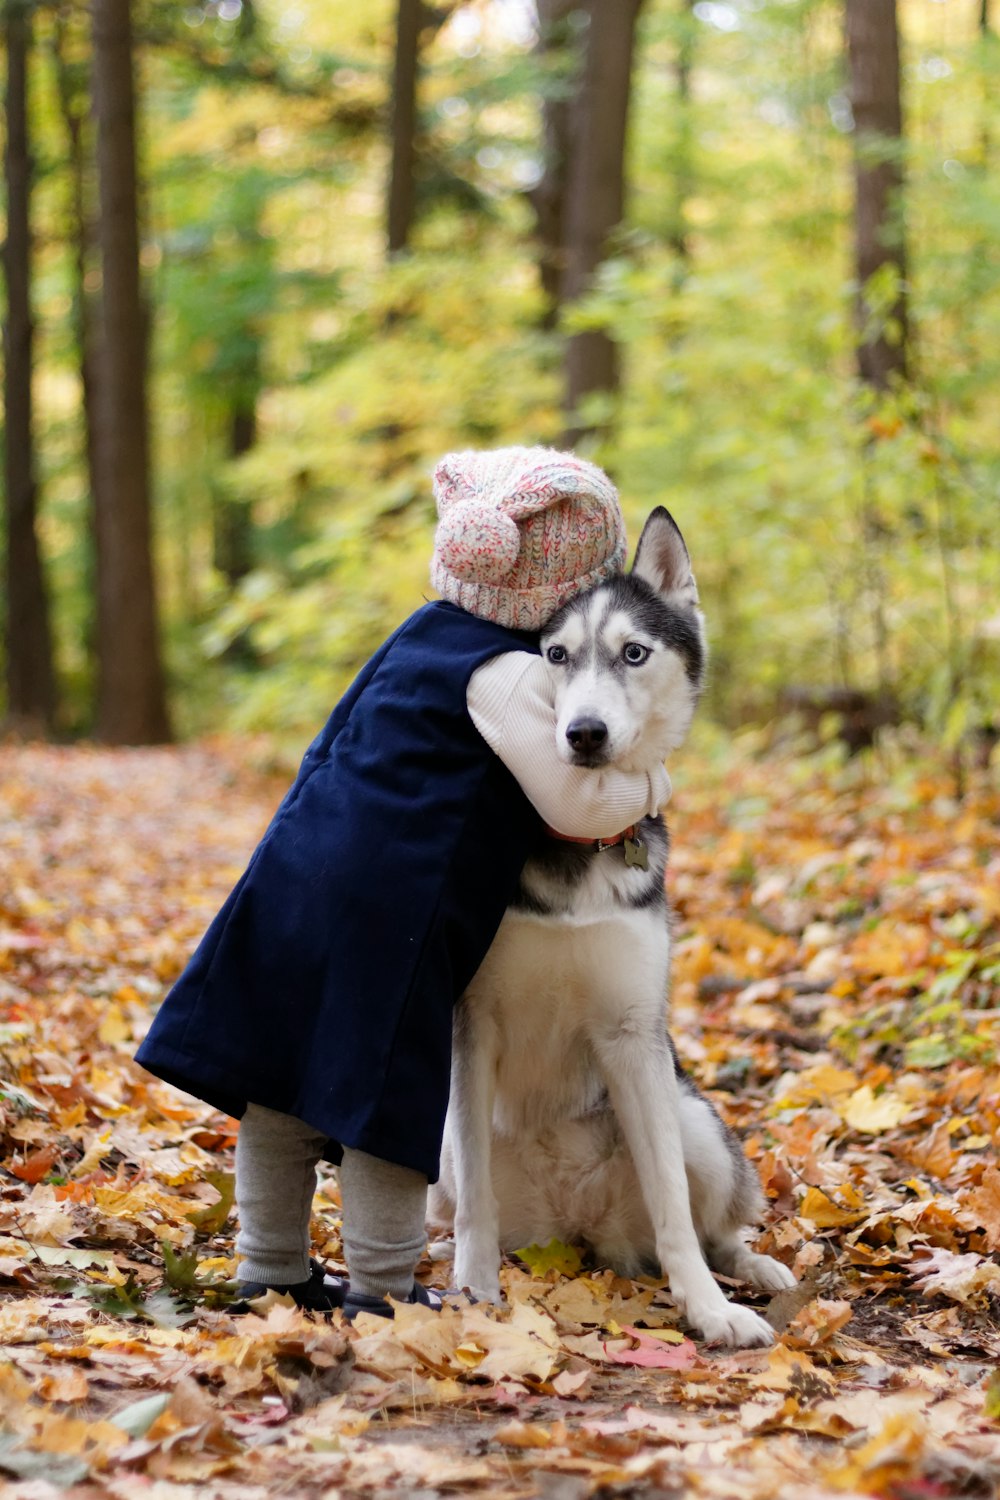 Hug Animal Pictures | Download Free Images on Unsplash